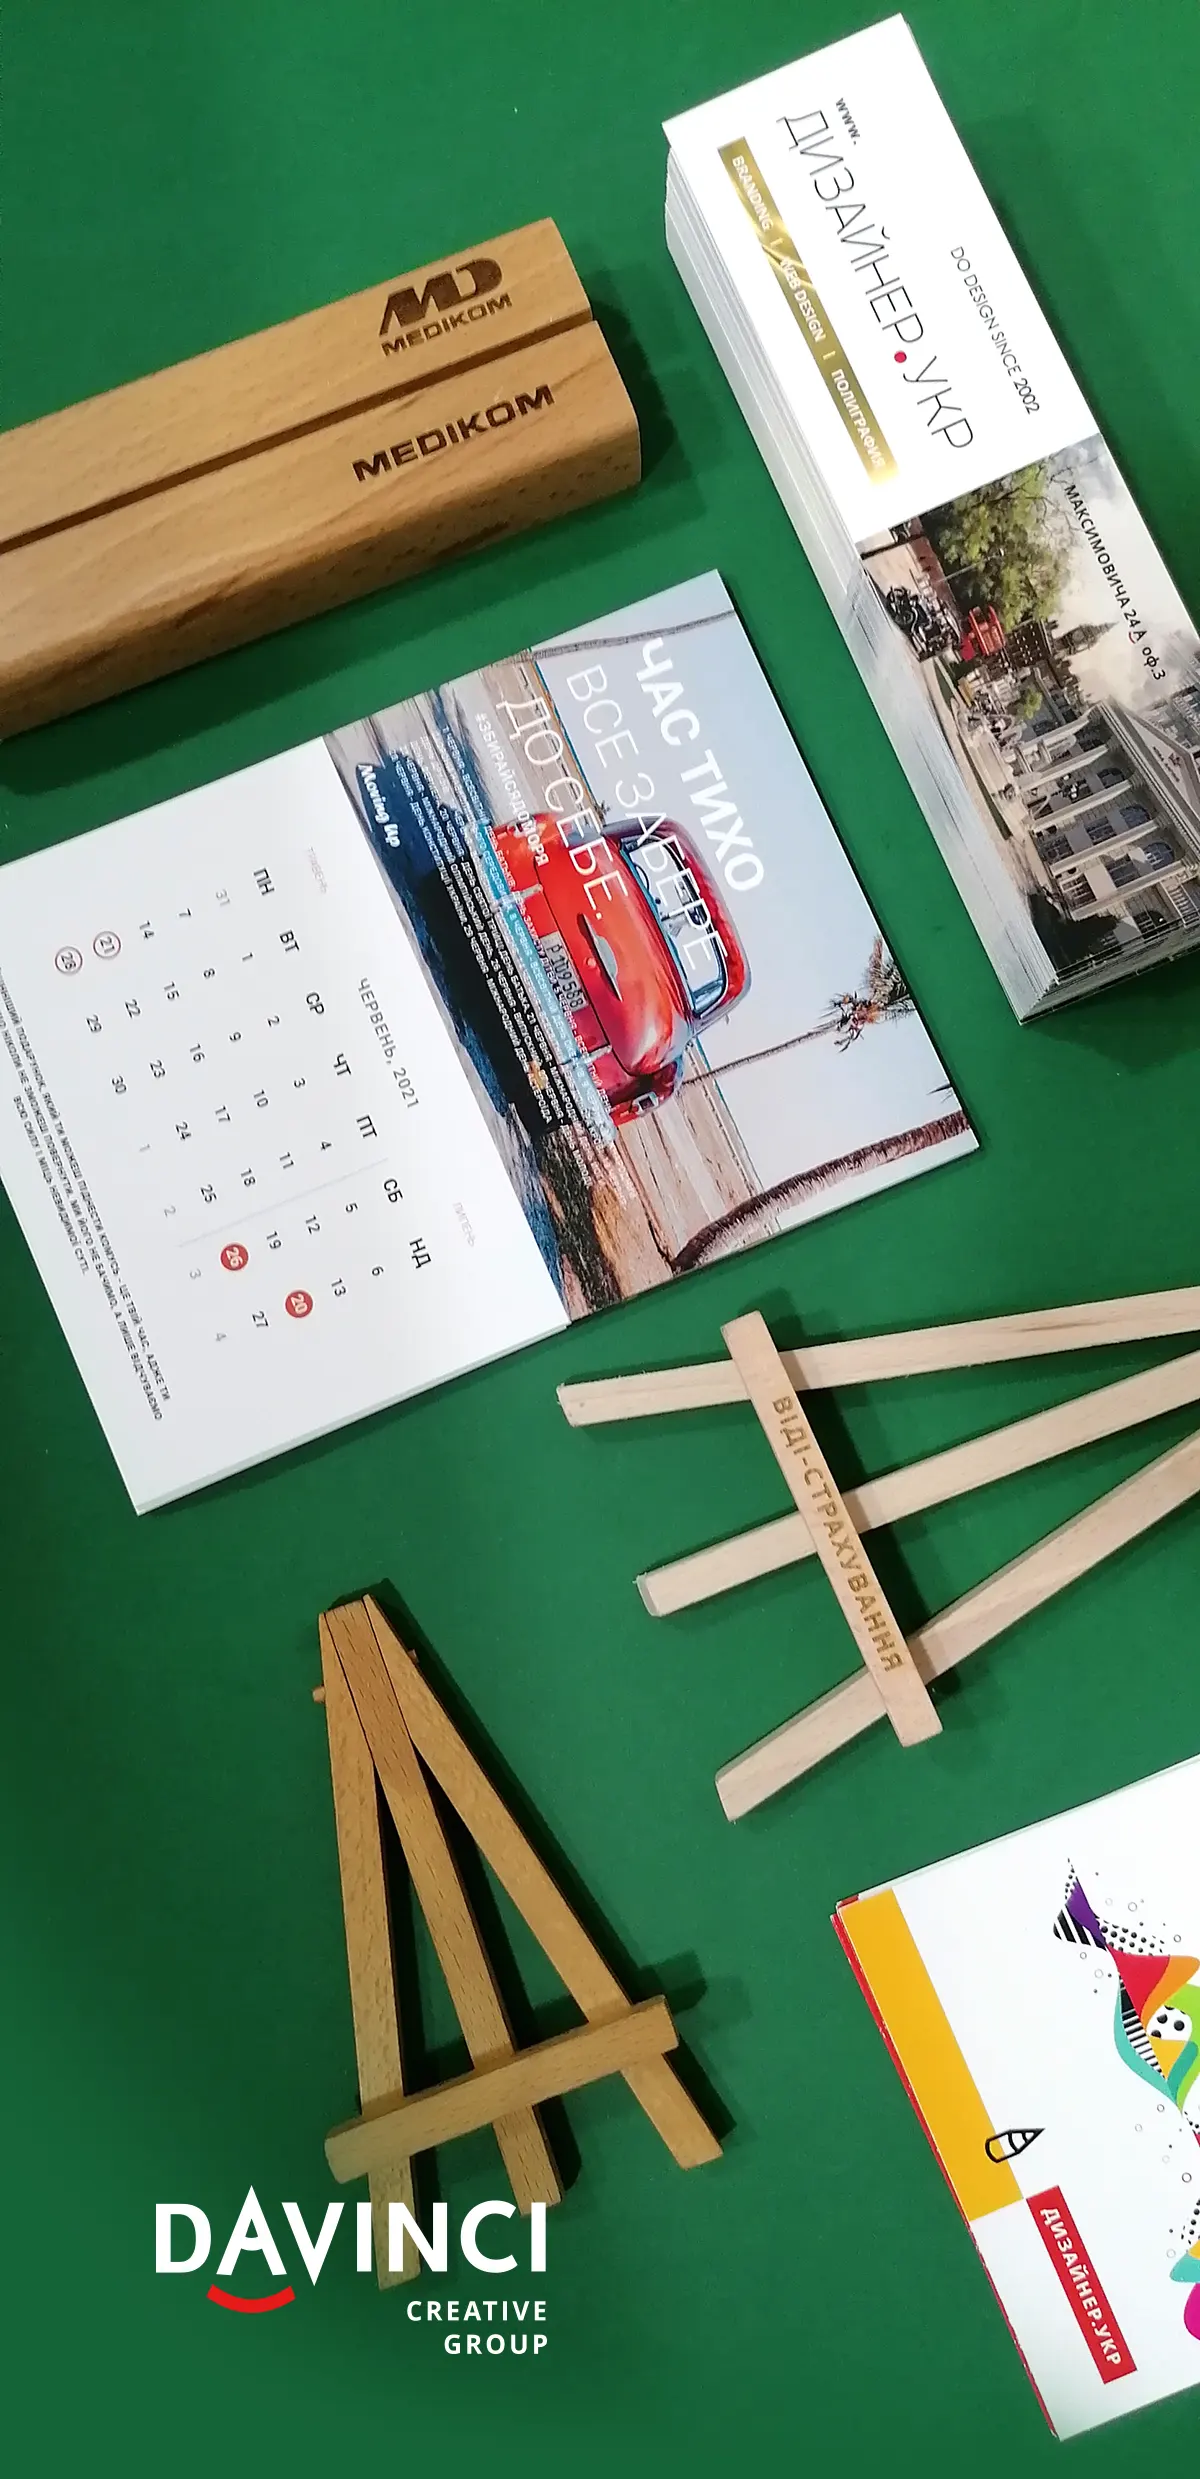 дизайн креативных календарей на подставках